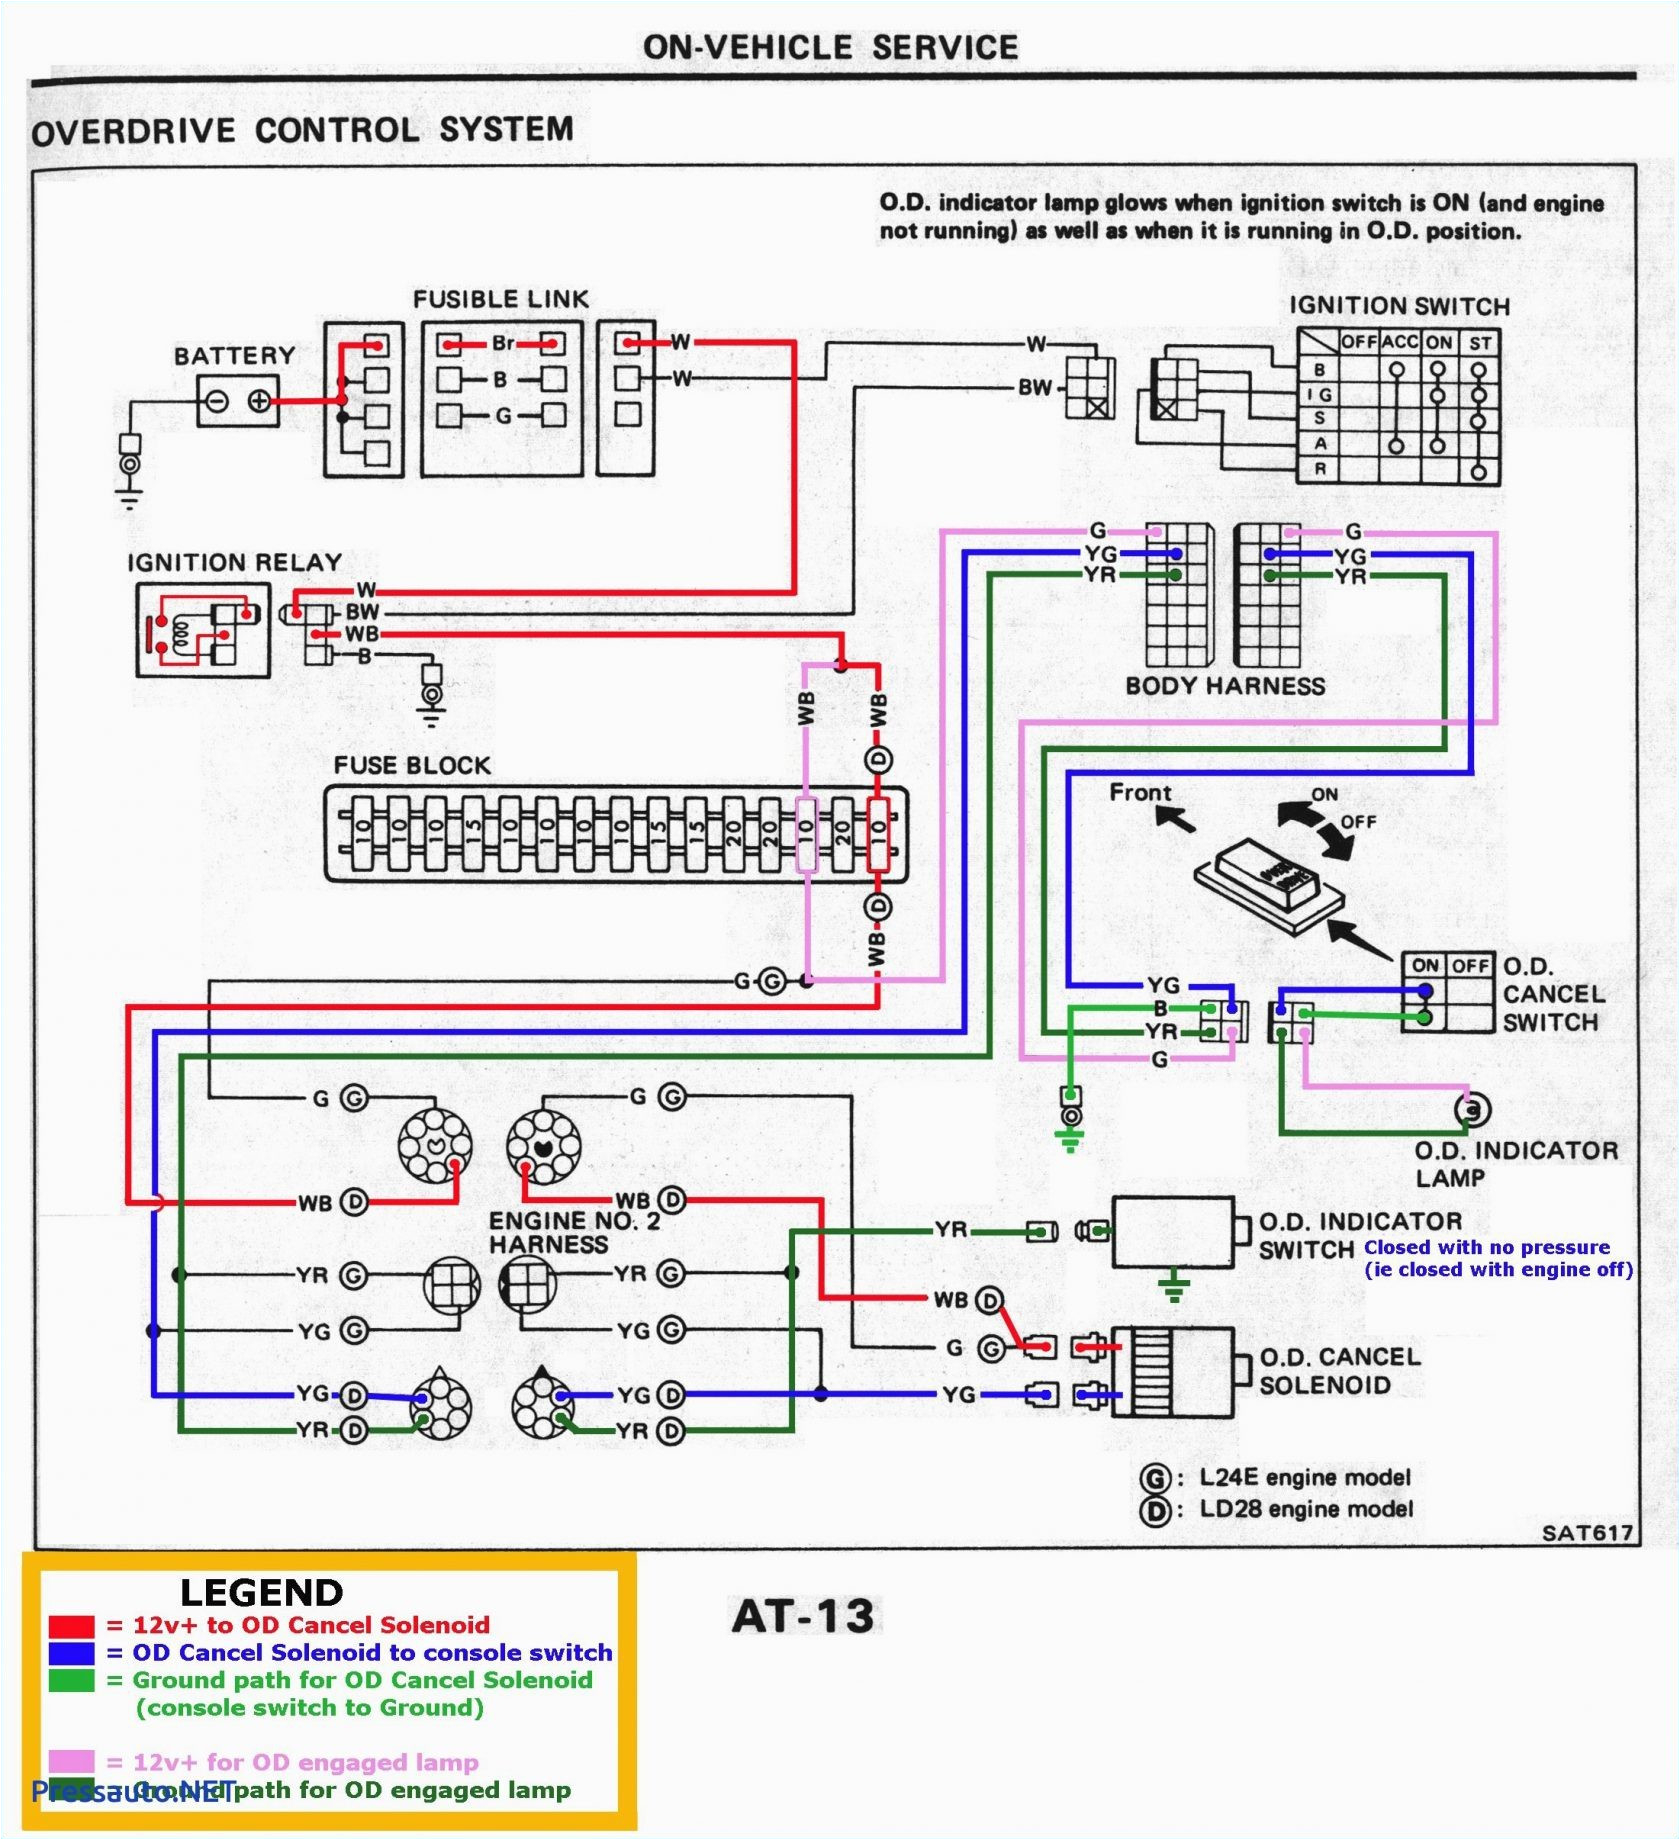 autoshop101 wiring diagrams wiring diagram expert autoshop101 wiring diagrams